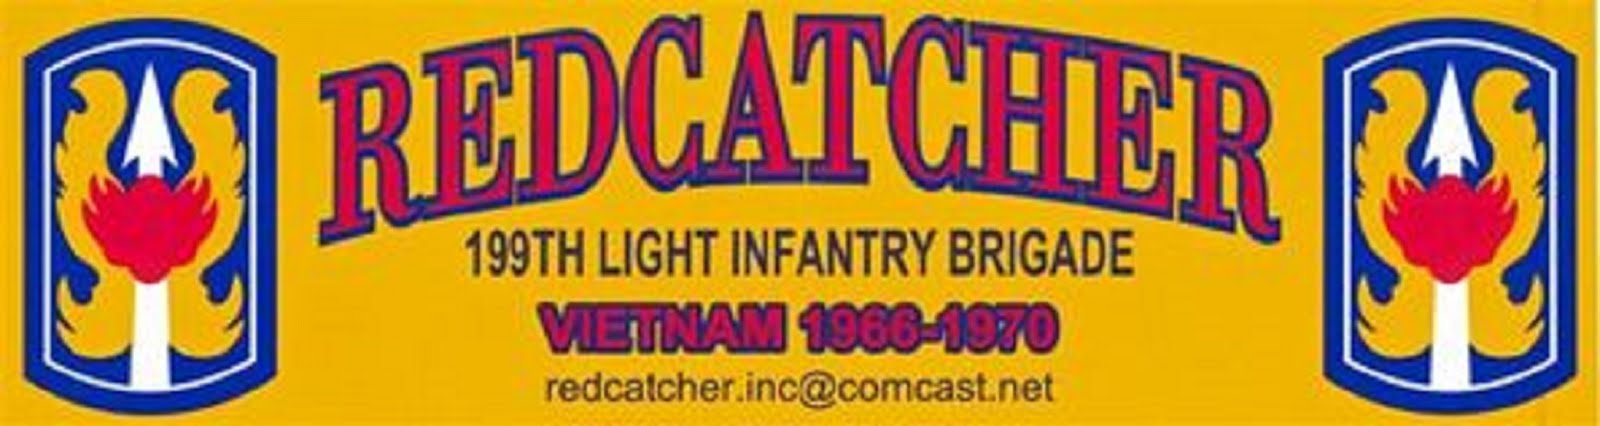 REDCATCHER - 199th LIGHT INFANTRY BRIGADE